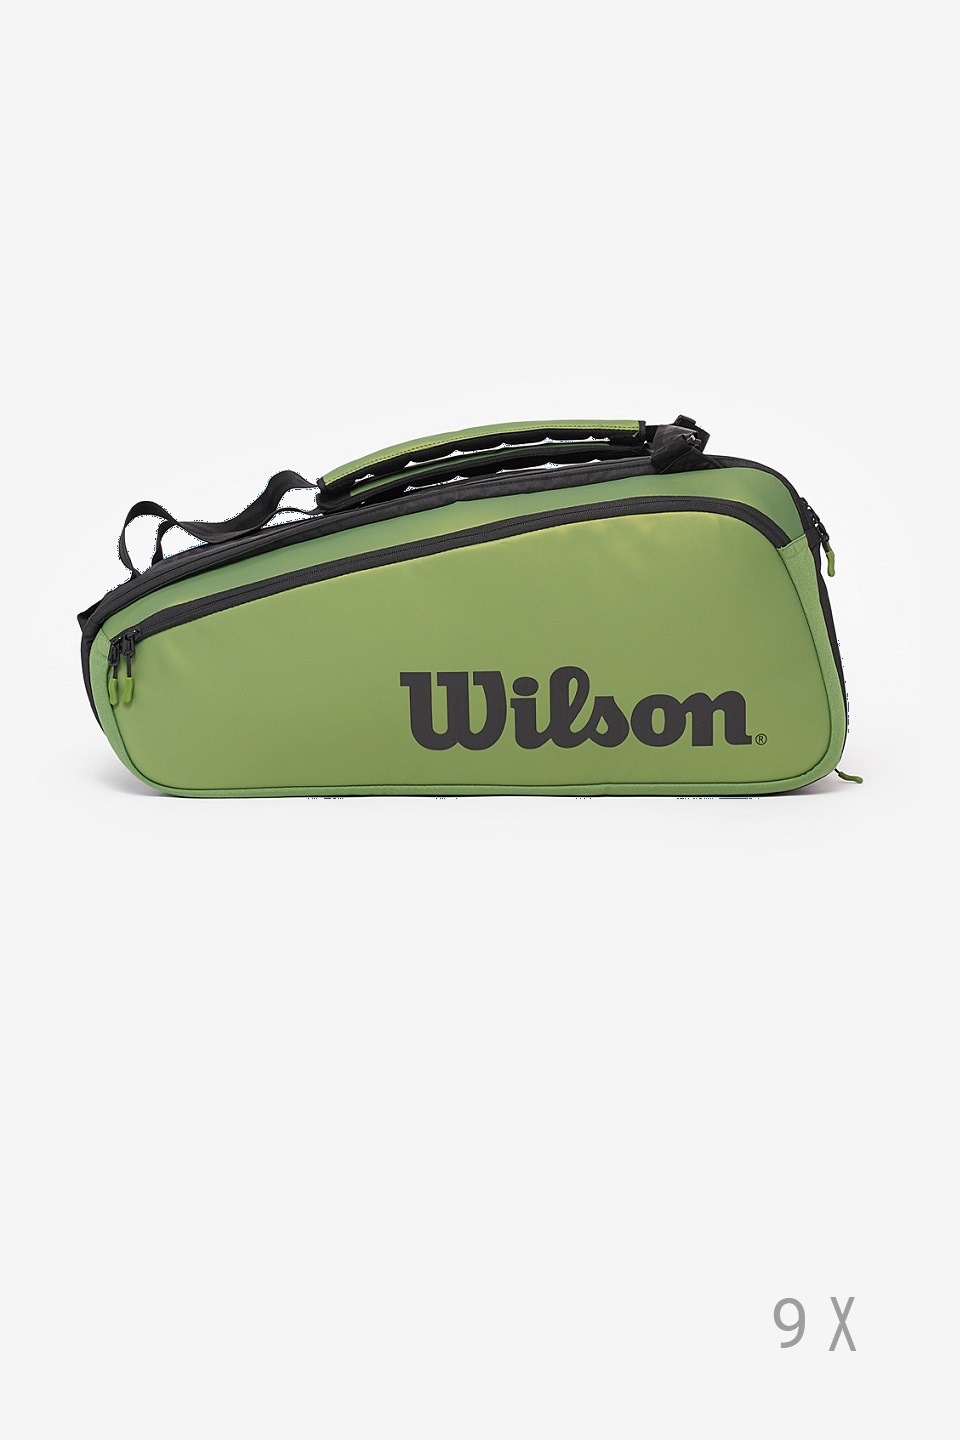 WİLSON - Wilson Super Tour Blade 9 Pack Tennis Bag